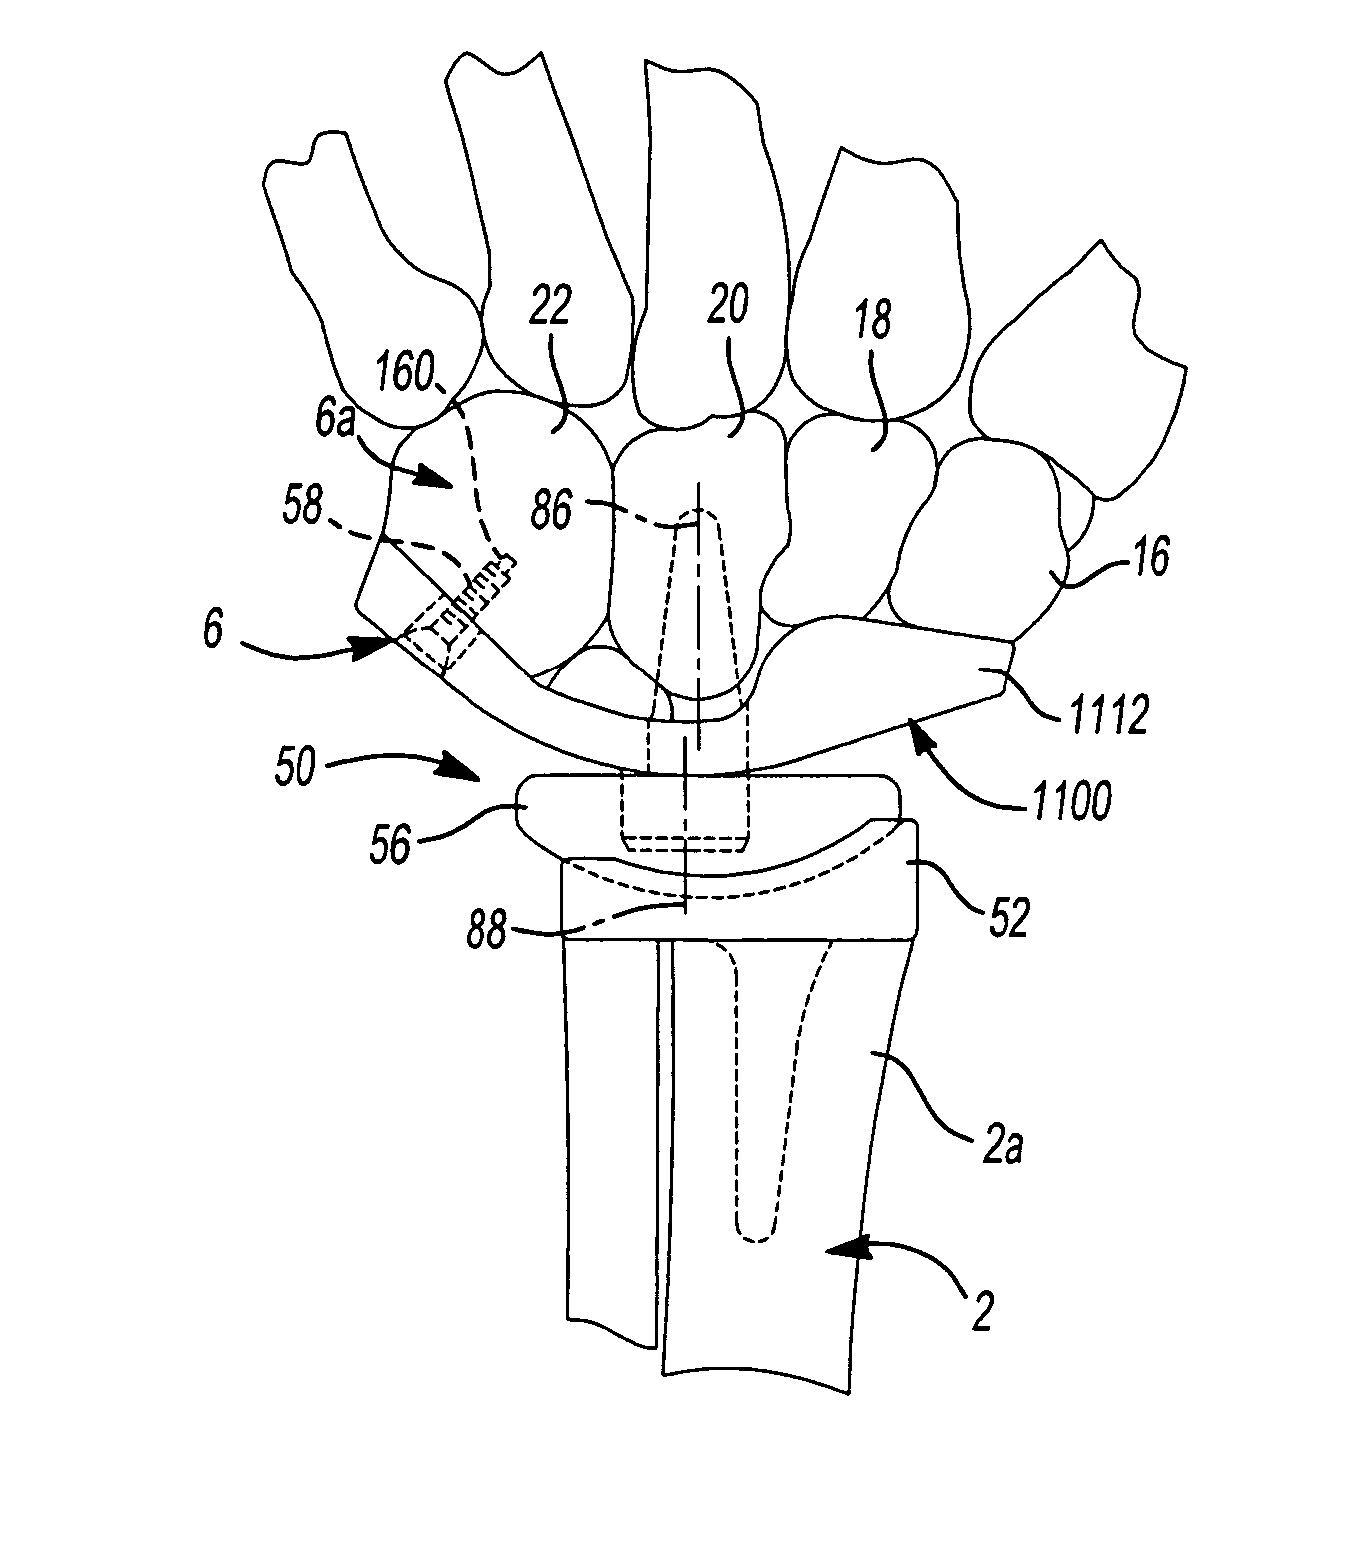 Method and apparatus for wrist arthroplasty